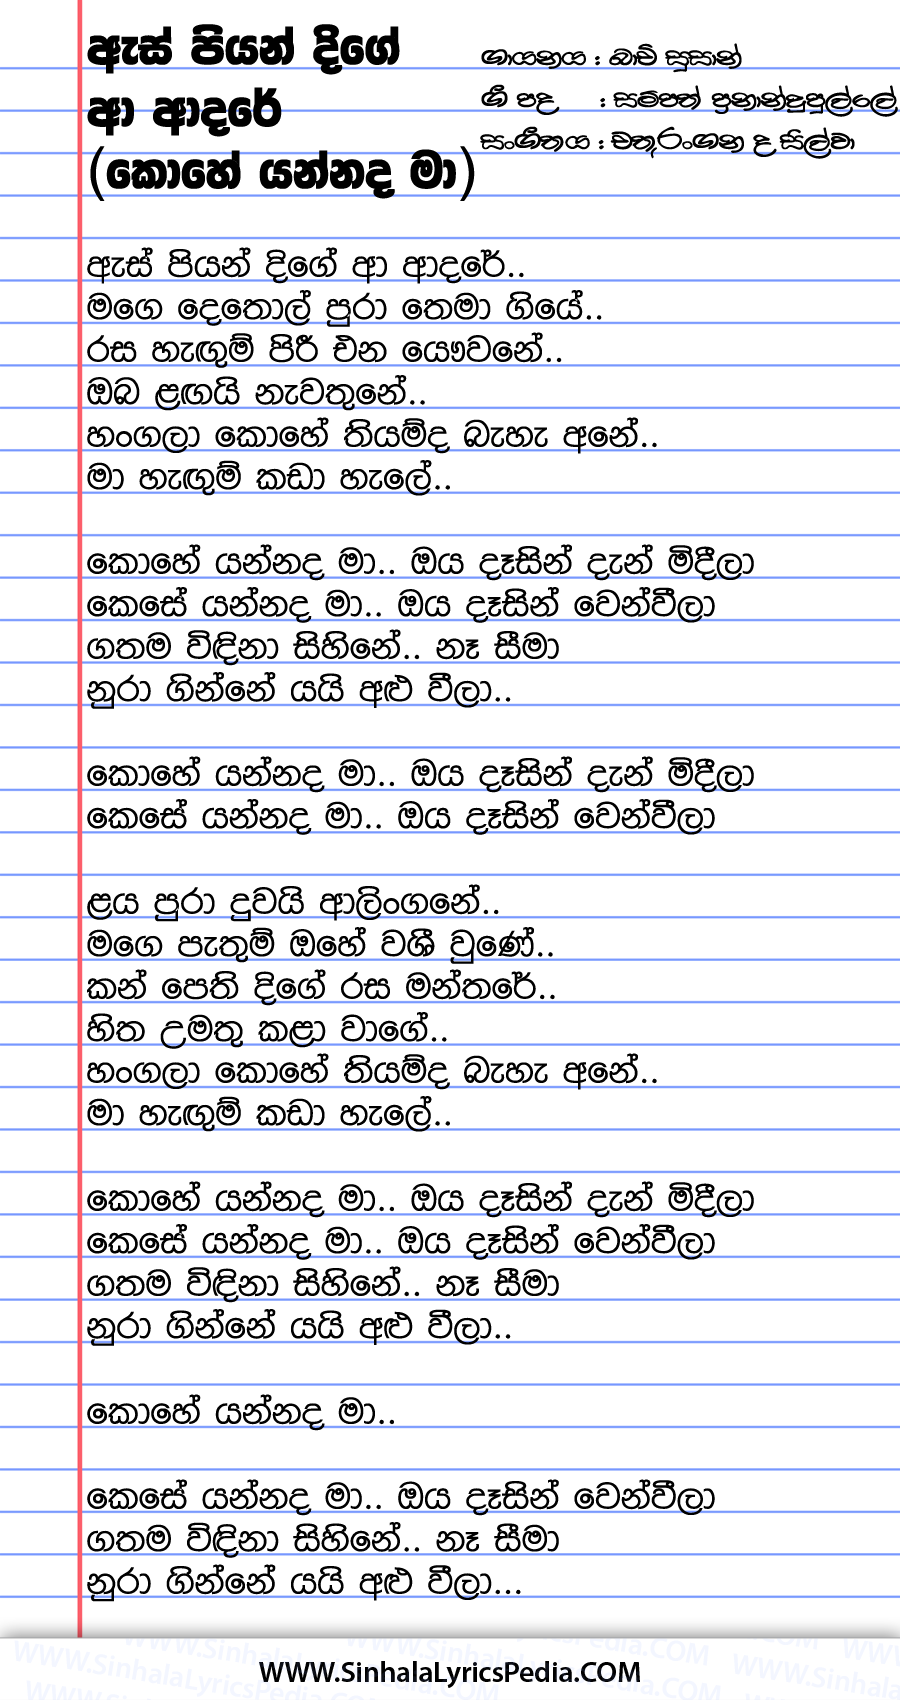 As Piyan Dige Aa Adare (Kohe Yannada Ma) Song Lyrics